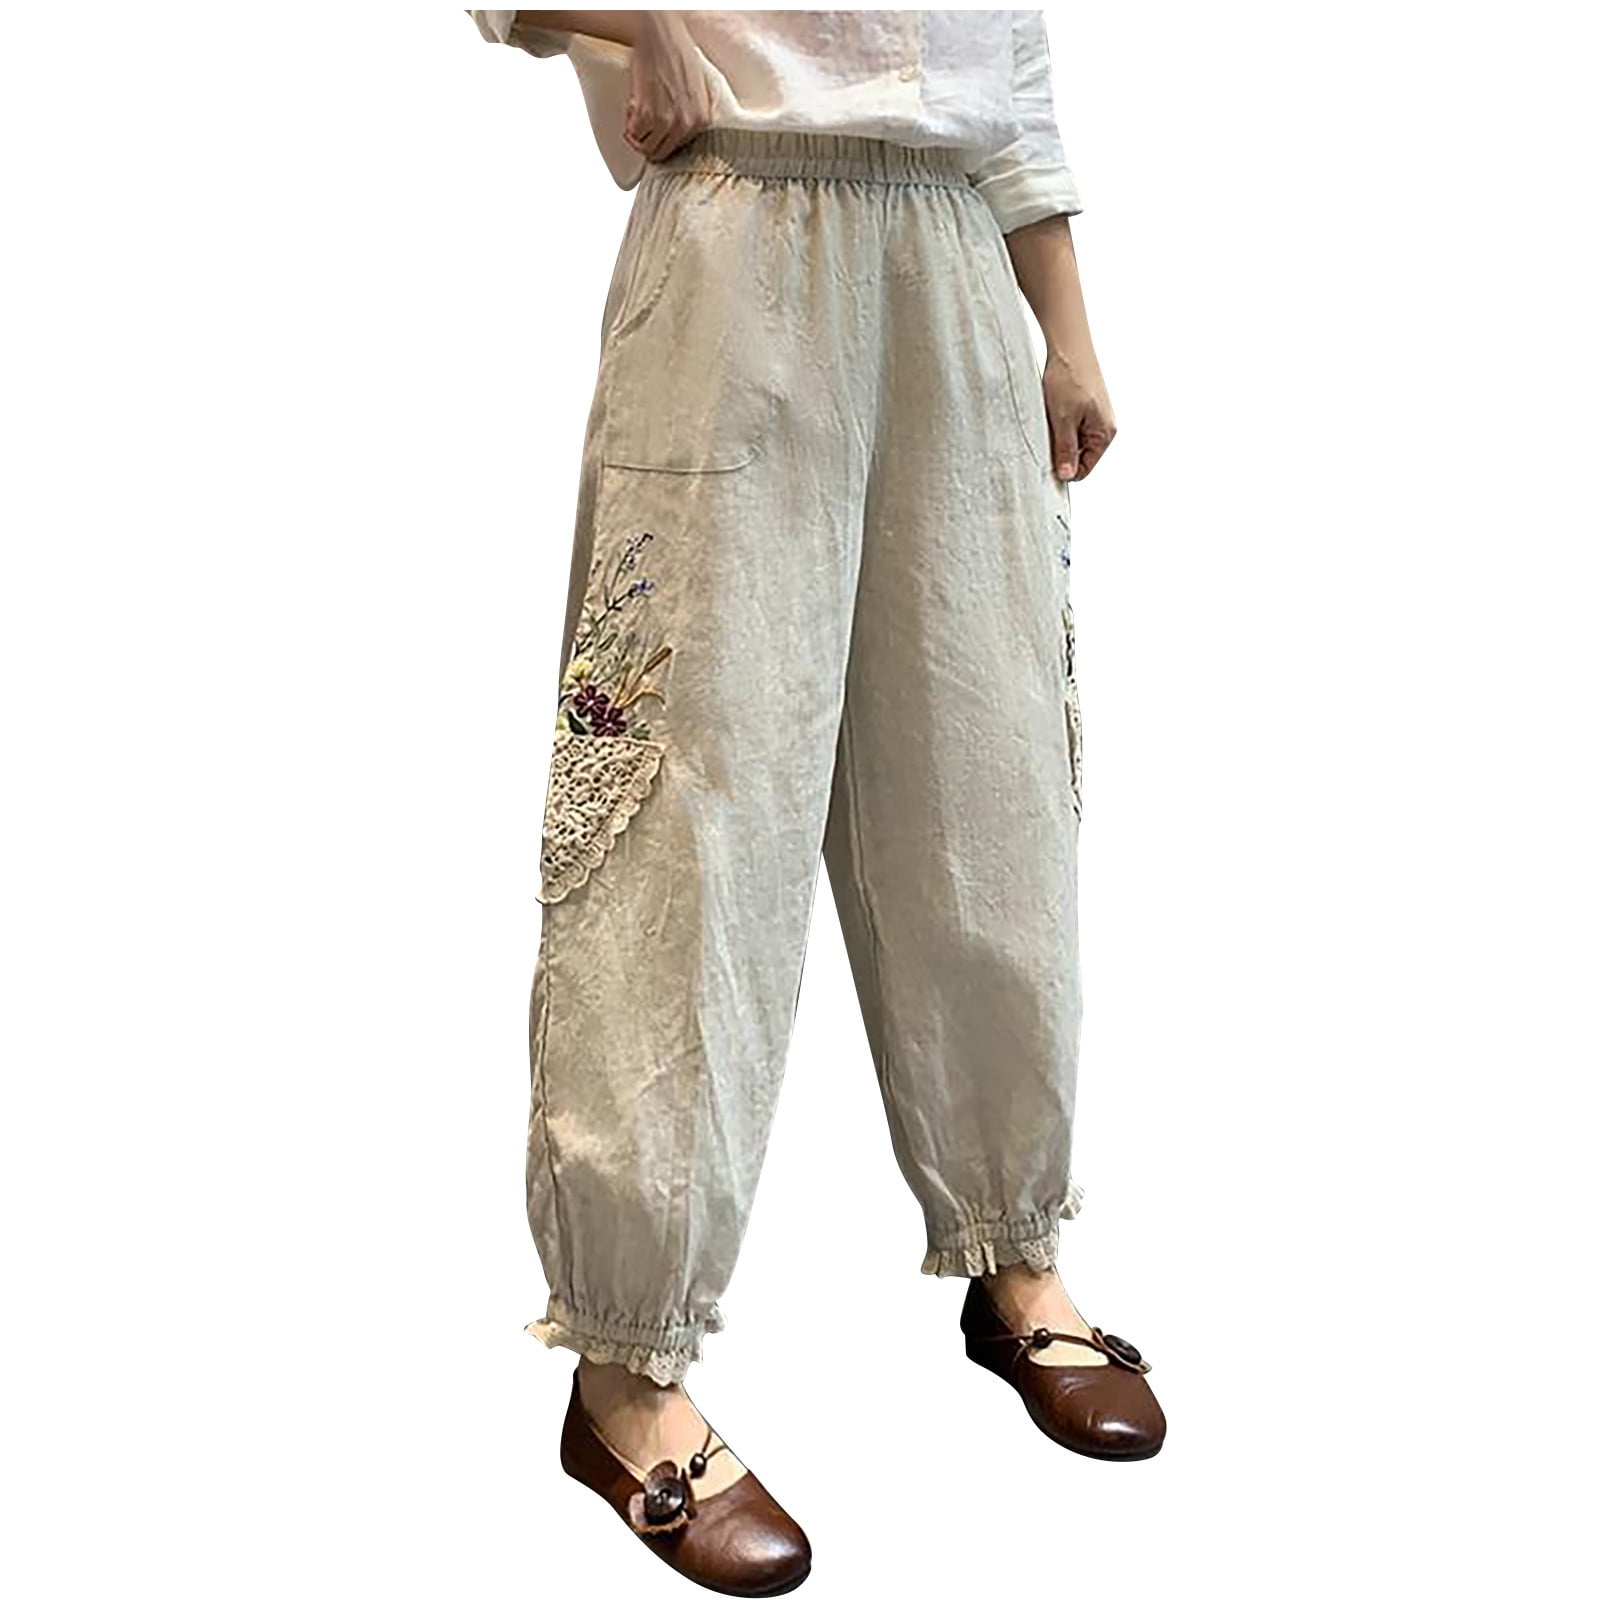 VSSSJ Pants for Women Cotton Linen Loose Fit Vintage Embroidery Lace  Elastic Waist Cropped Lantern Pants Casual Comfortable Trousers with Pocket  Beige XL 